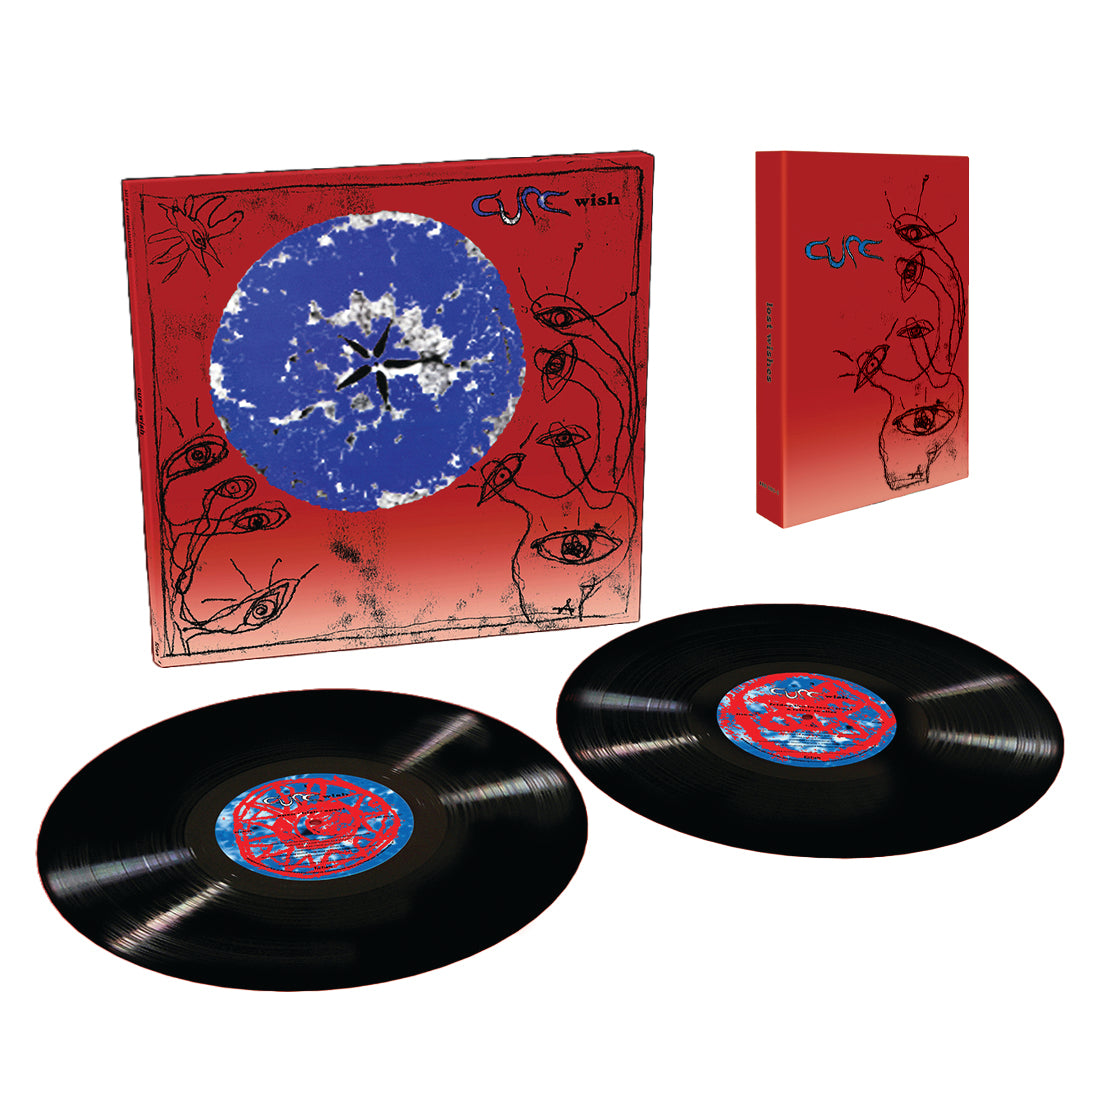 Wish (30th Anniversary): Vinyl 2LP + Exclusive Lost Wishes Cassette